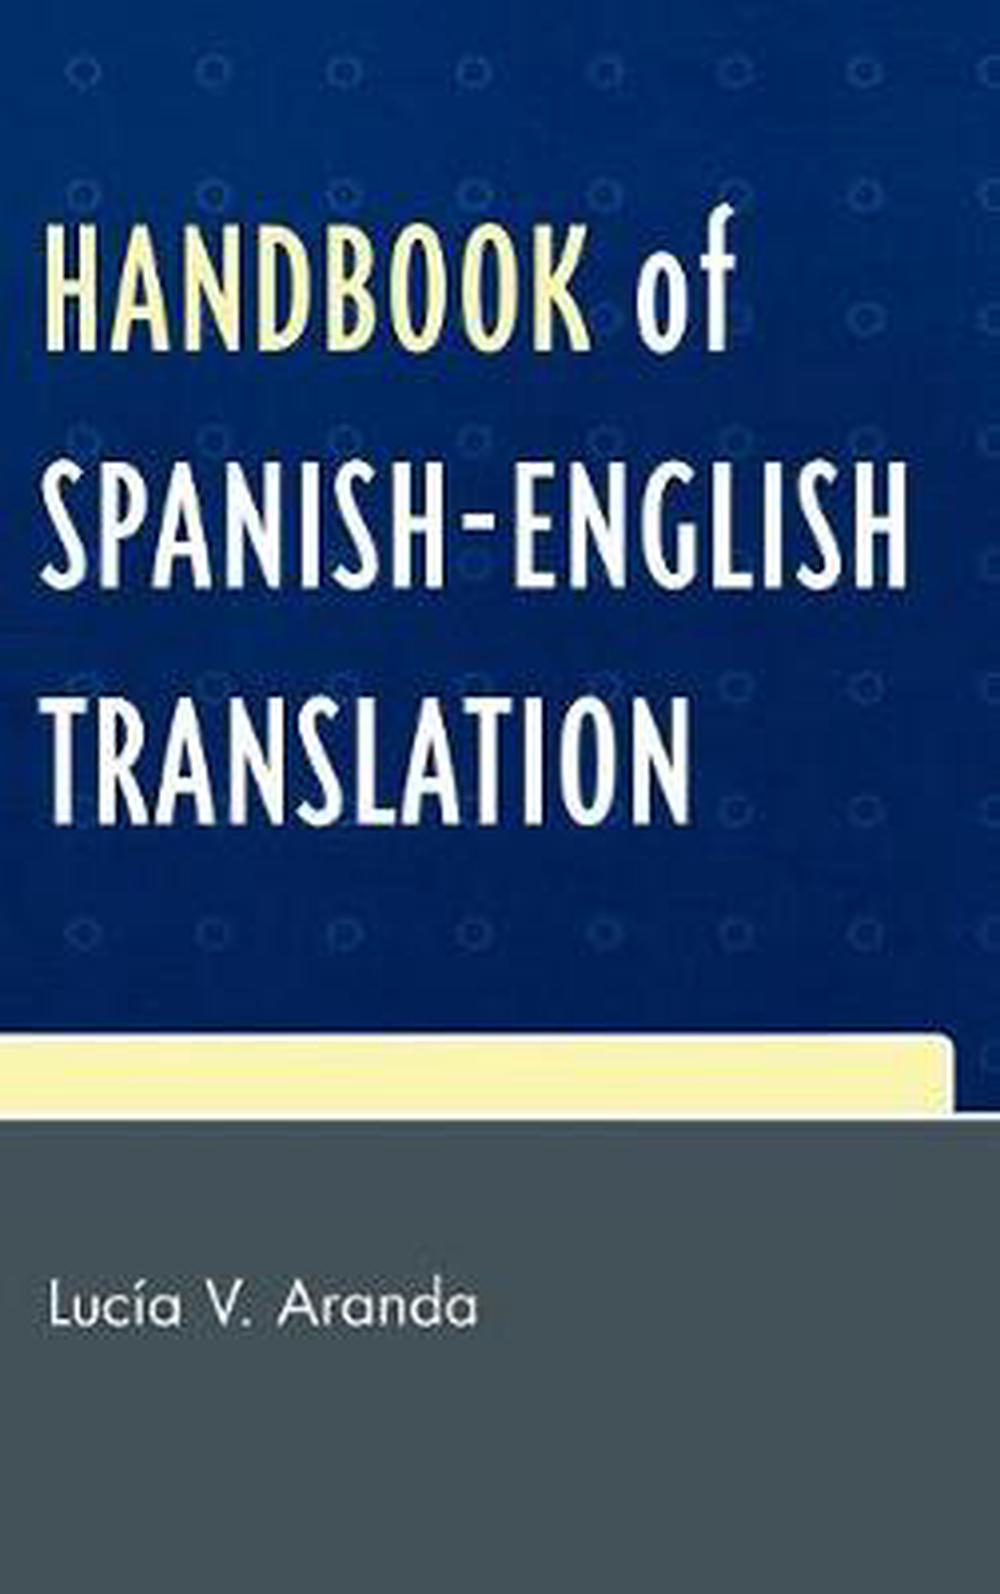 Spaniah To English - Translation Service English to Spanish & Spanish